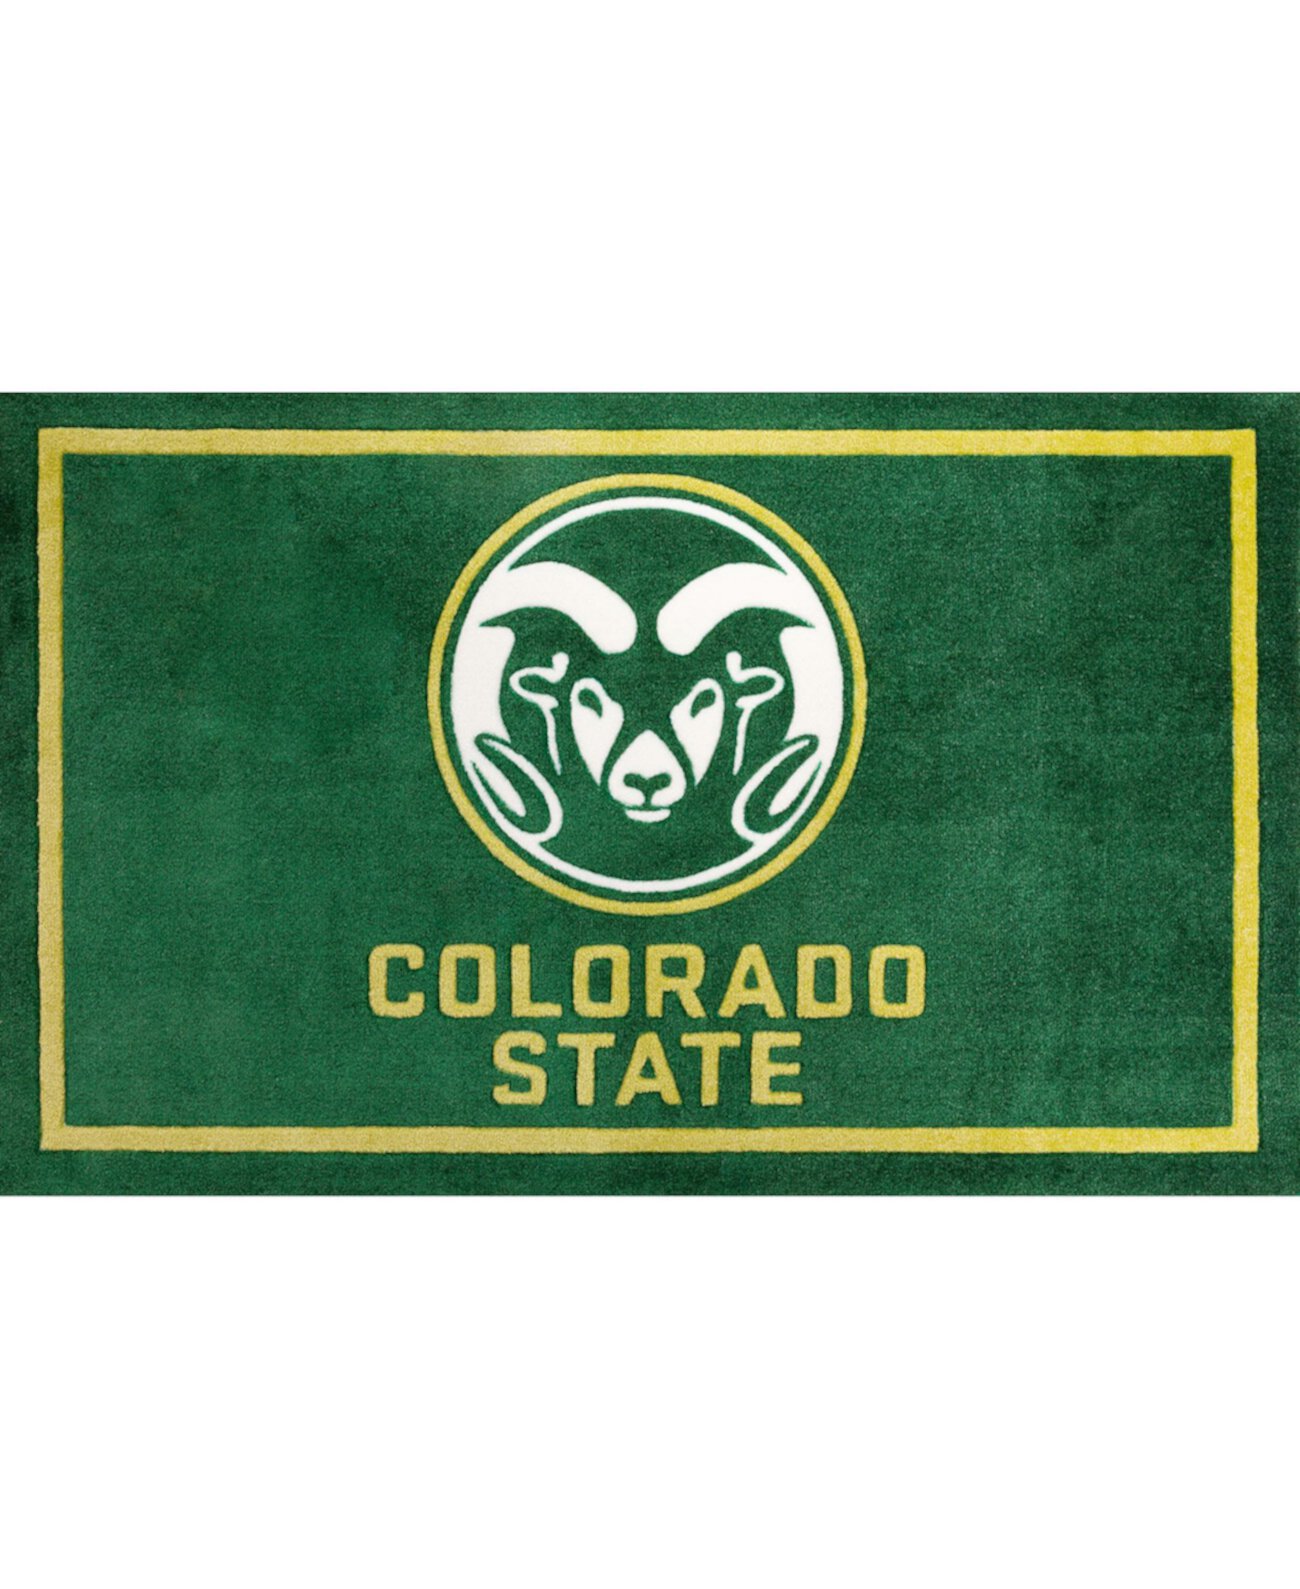 Зеленый коврик Colcs штата Колорадо размером 1 фут 8 x 2 фута 6 дюймов Luxury Sports Rugs